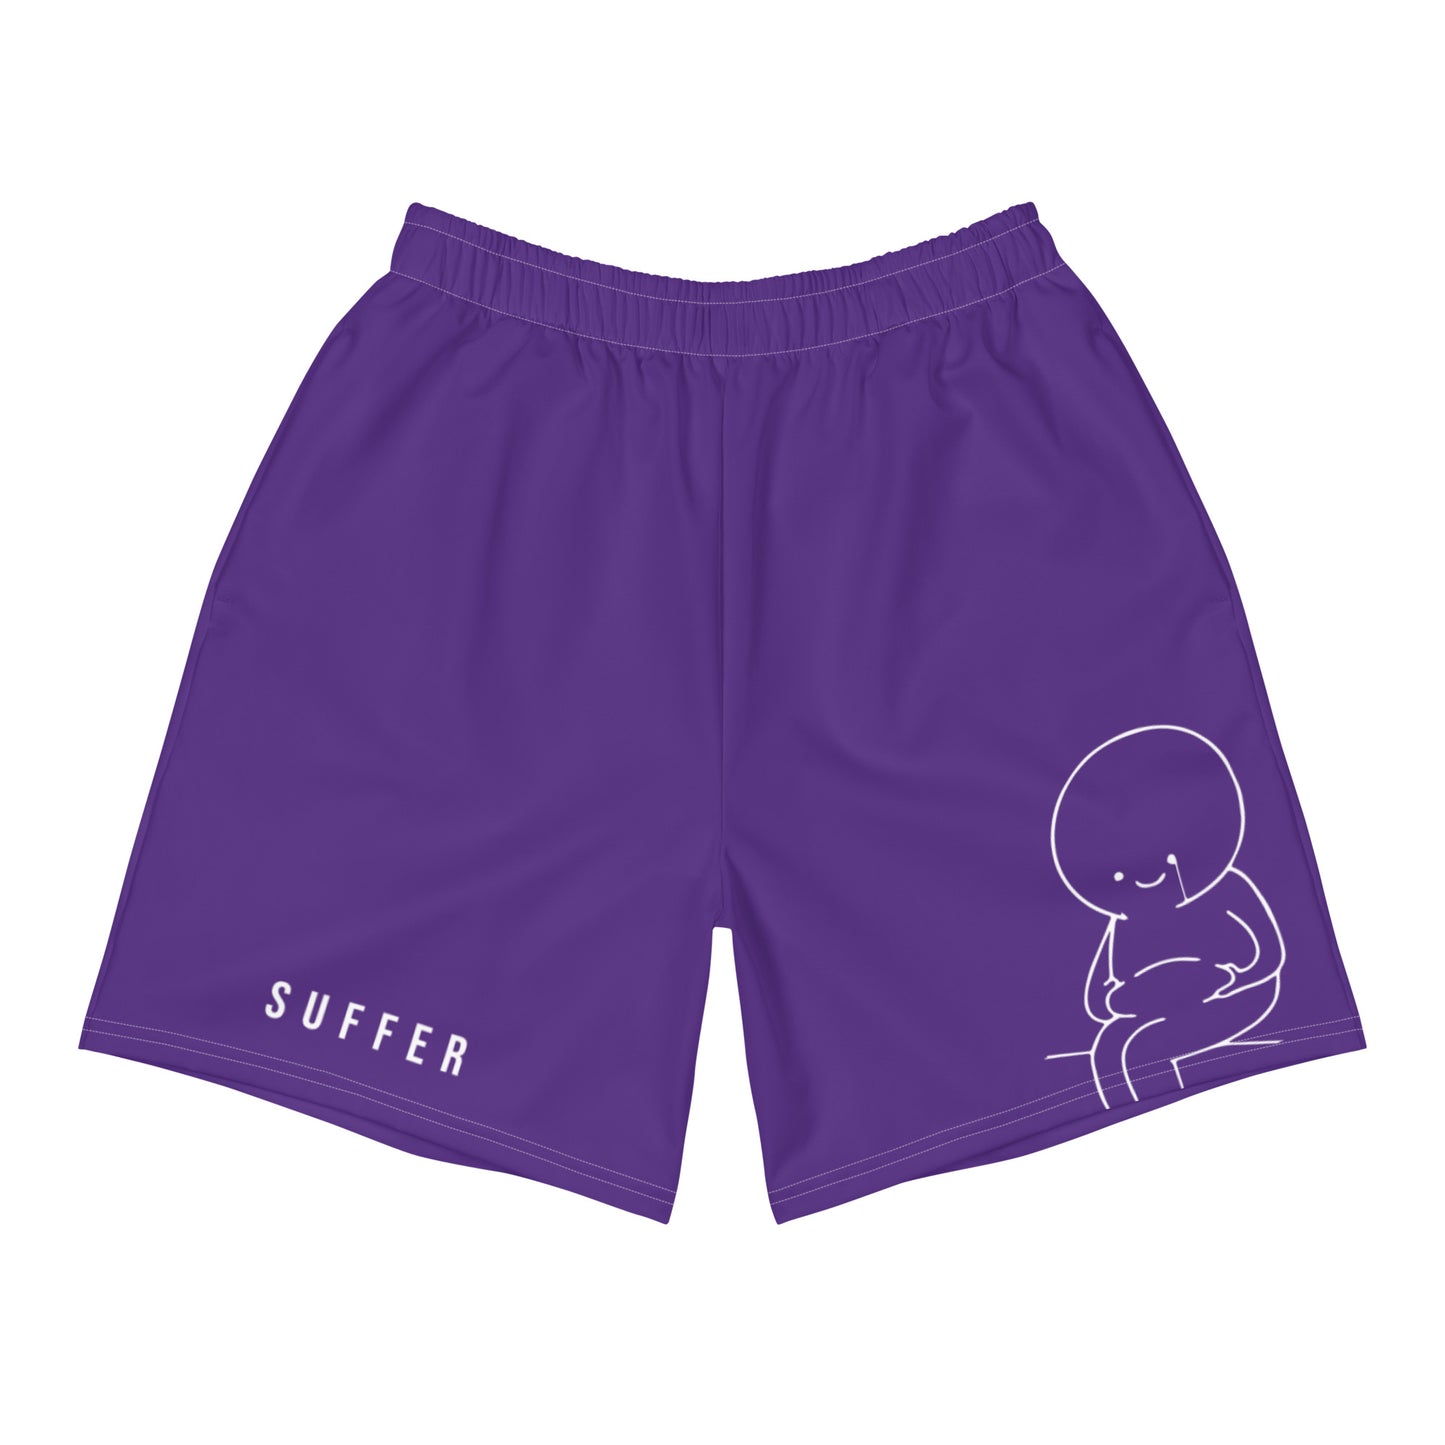 Purple SUFFER Mascot Athletic Shorts